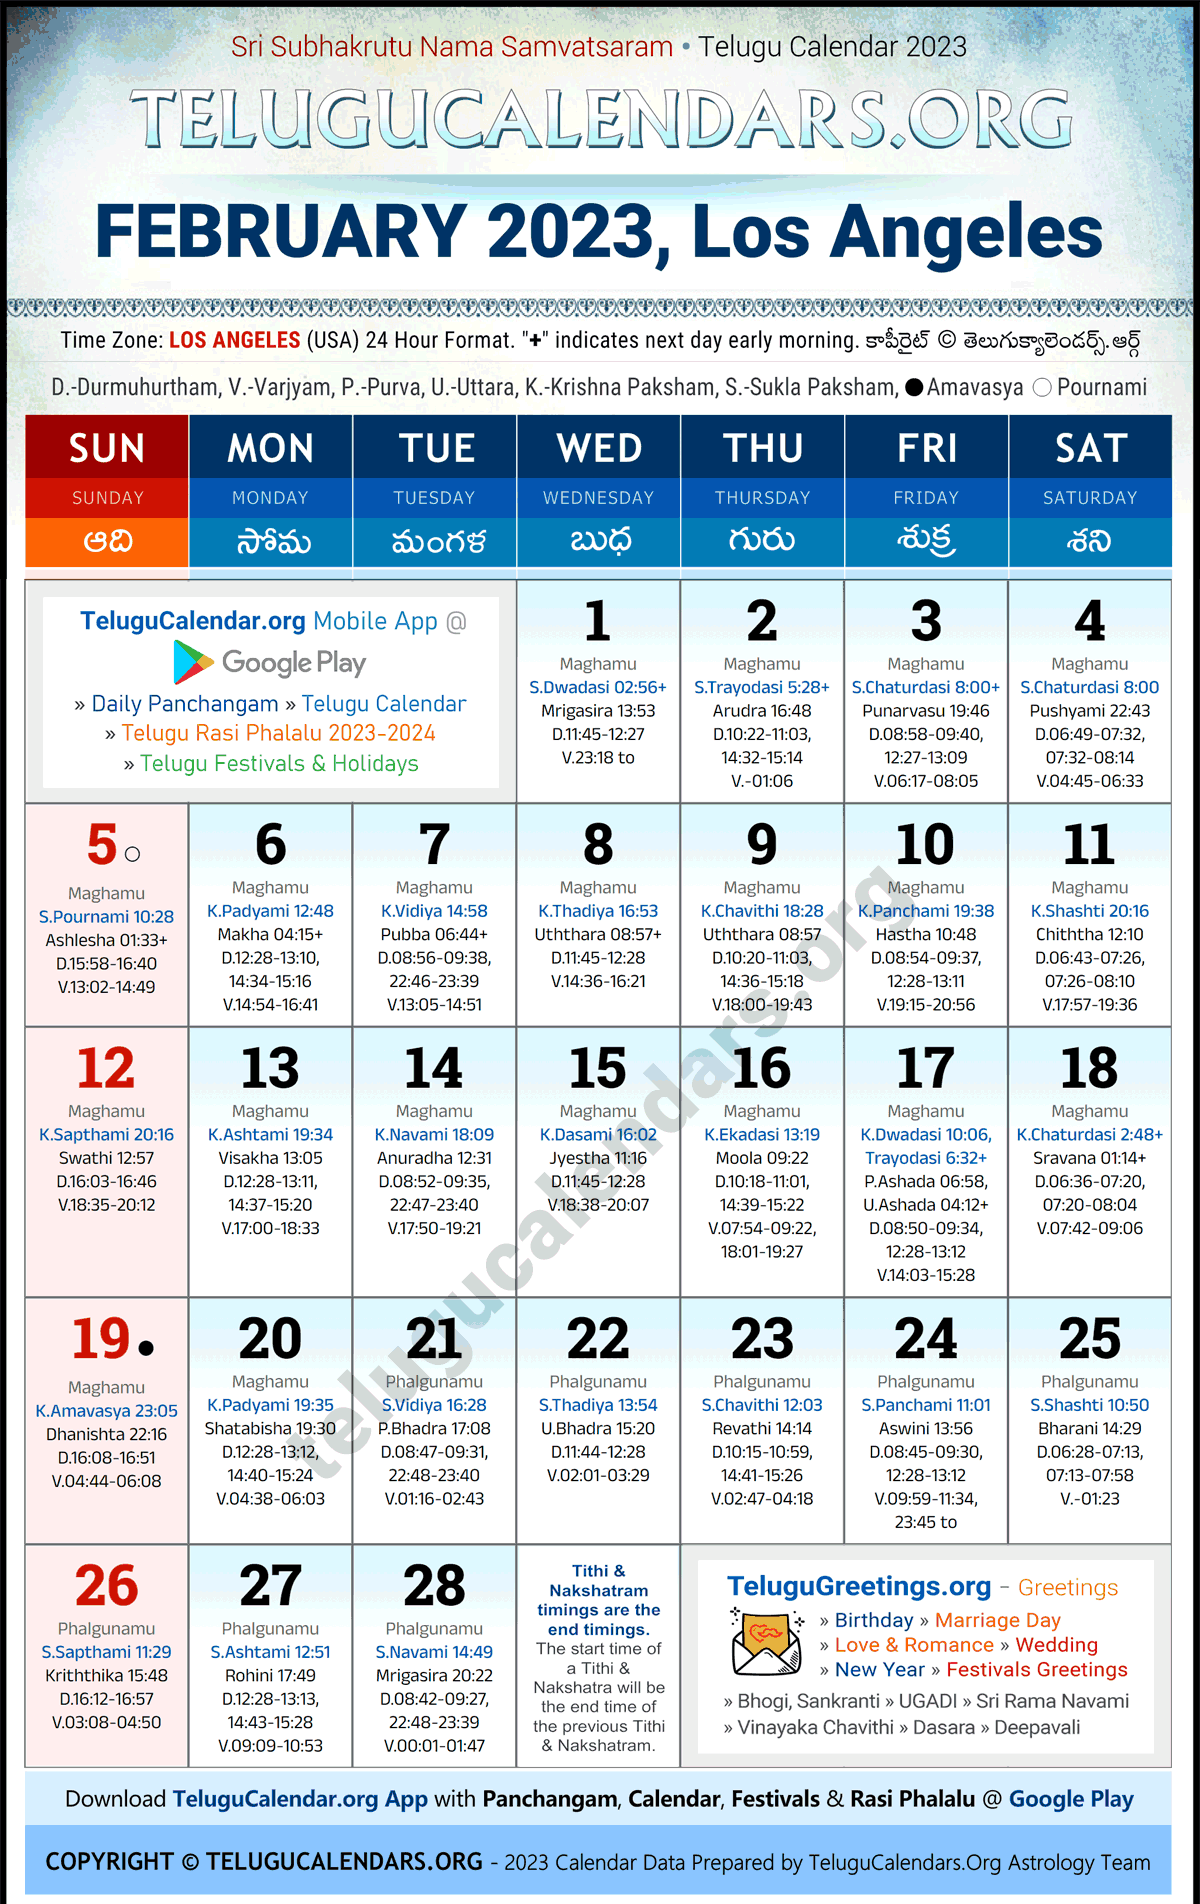 Los Angeles 2023 February Telugu Calendar Festivals & Holidays in